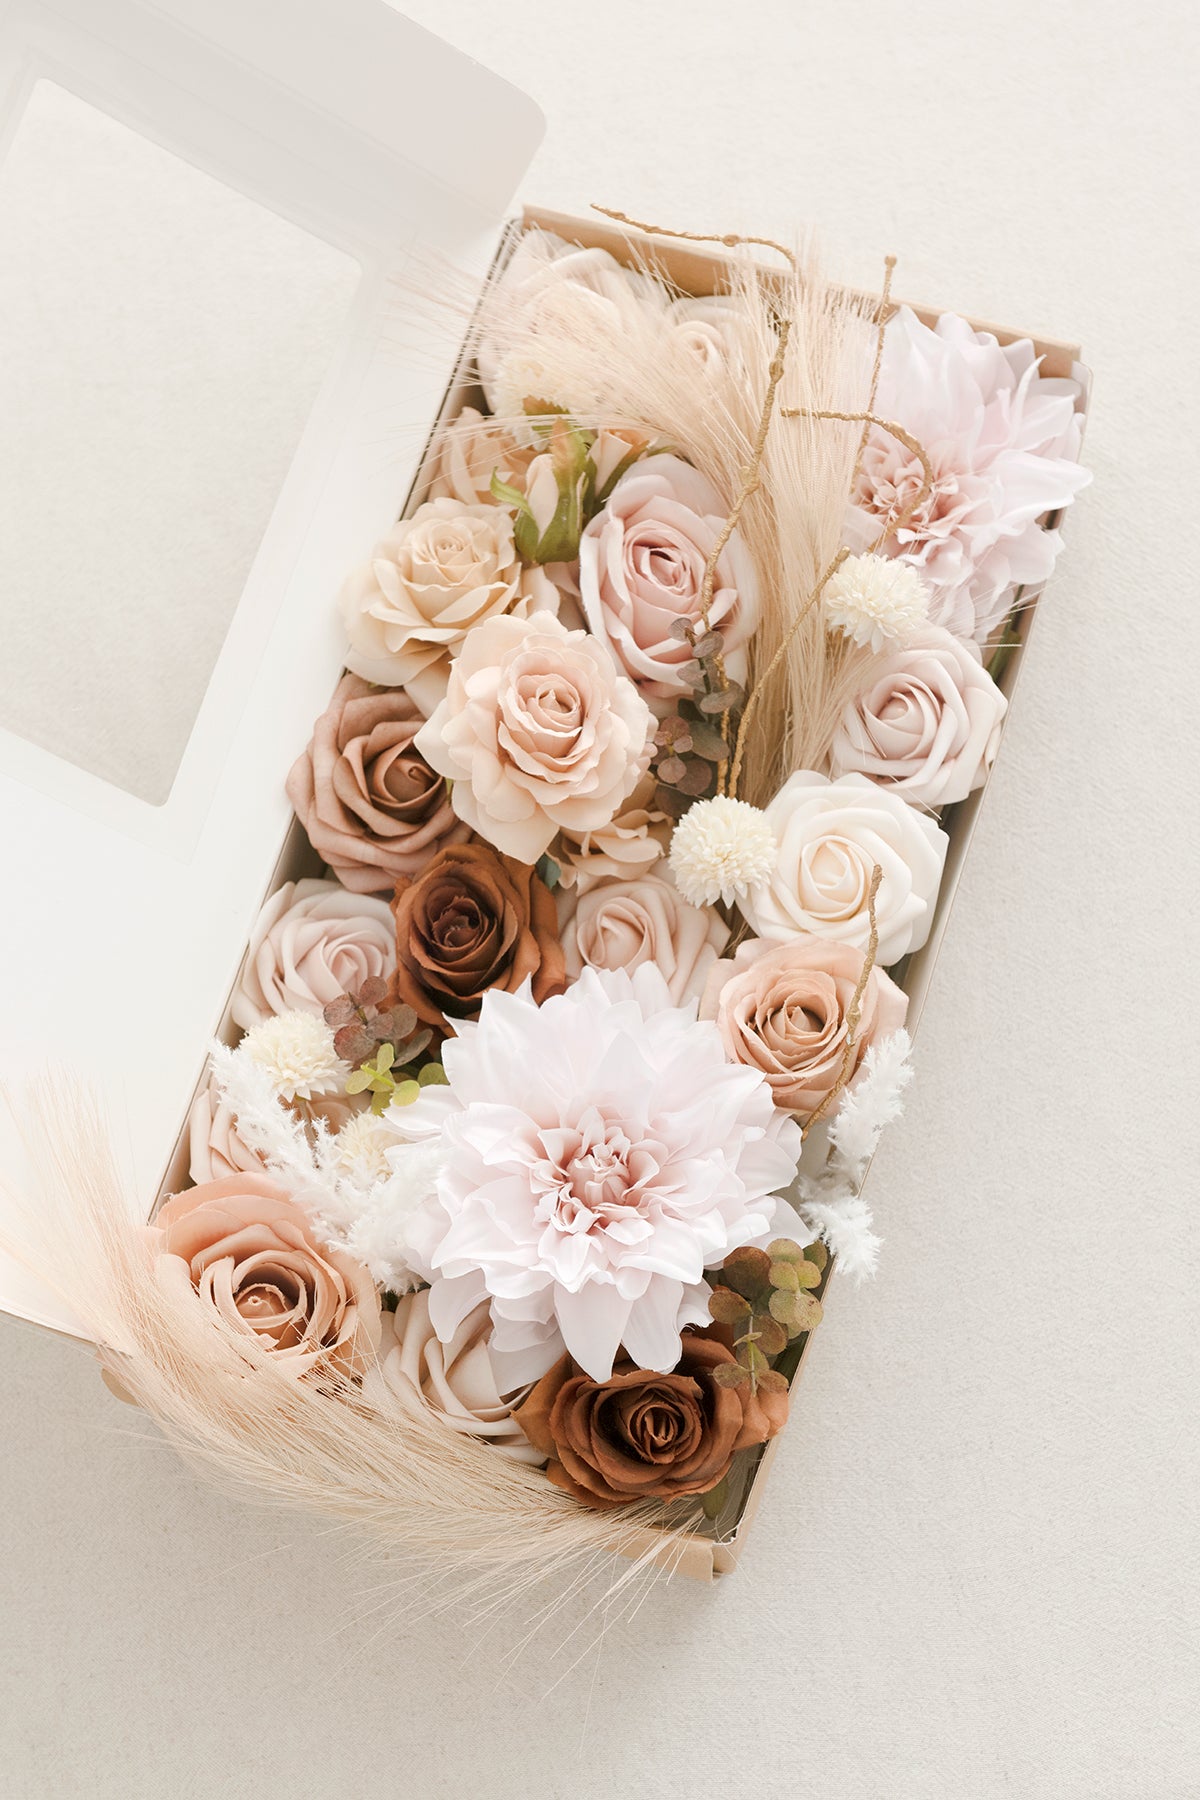 DIY Designer Flower Boxes in White & Beige